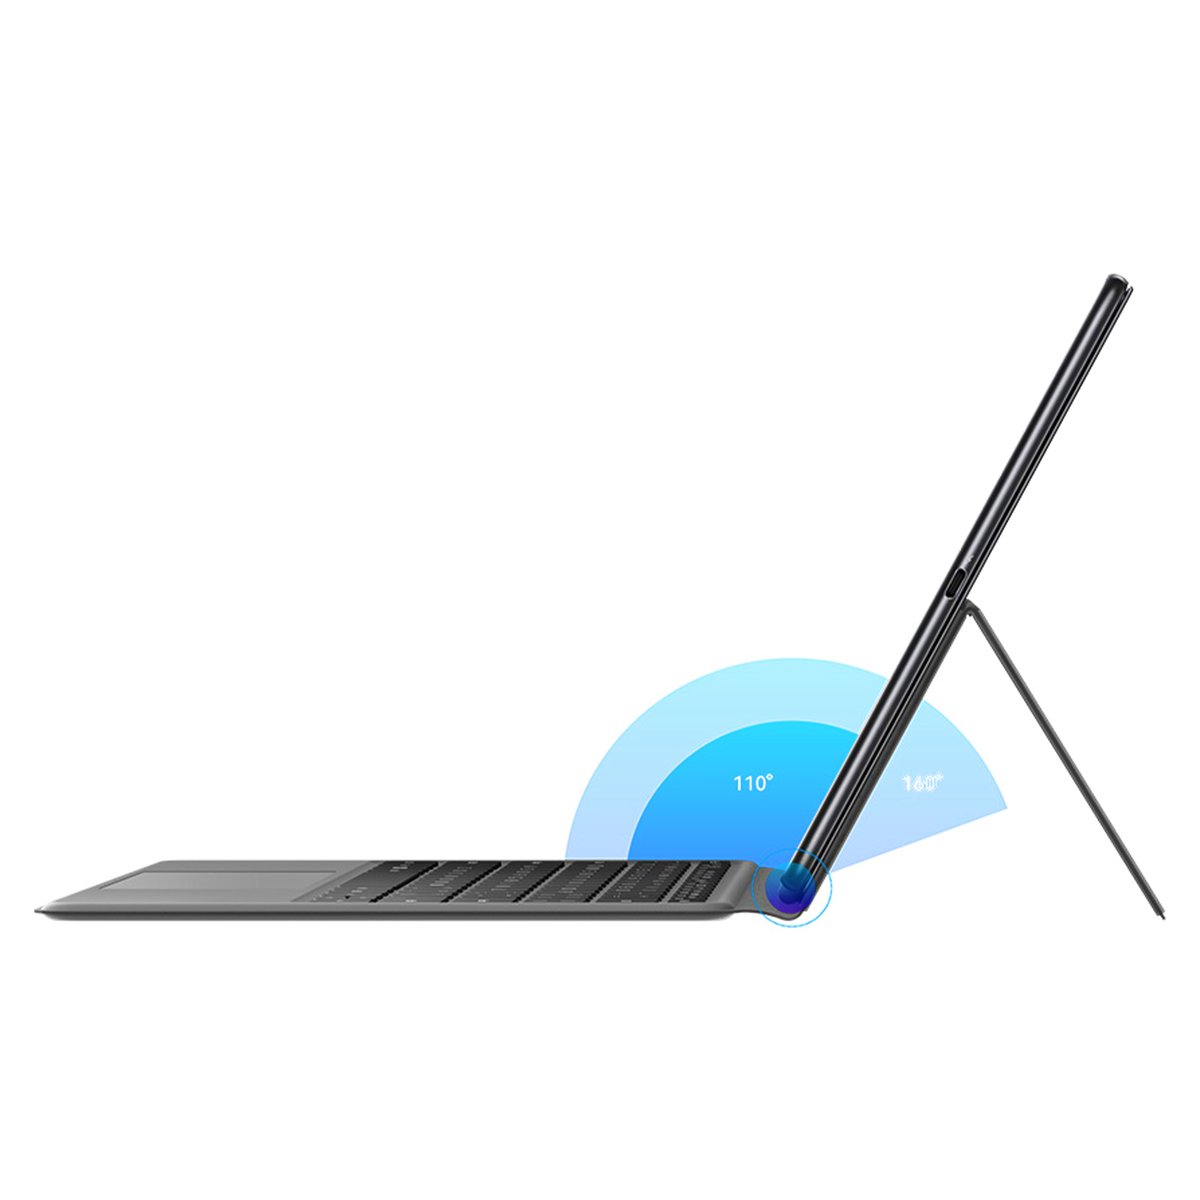 Huawei MateBook E D-W5821T Convertible 2 in 1 Laptop - 12.6” QHD AMOLED Touch Screen Display, 11th Gen Intel Core i5-1130G7 Processor, 8GB RAM, 256GB SSD, Intel UHD Graphics, Nebula Grey